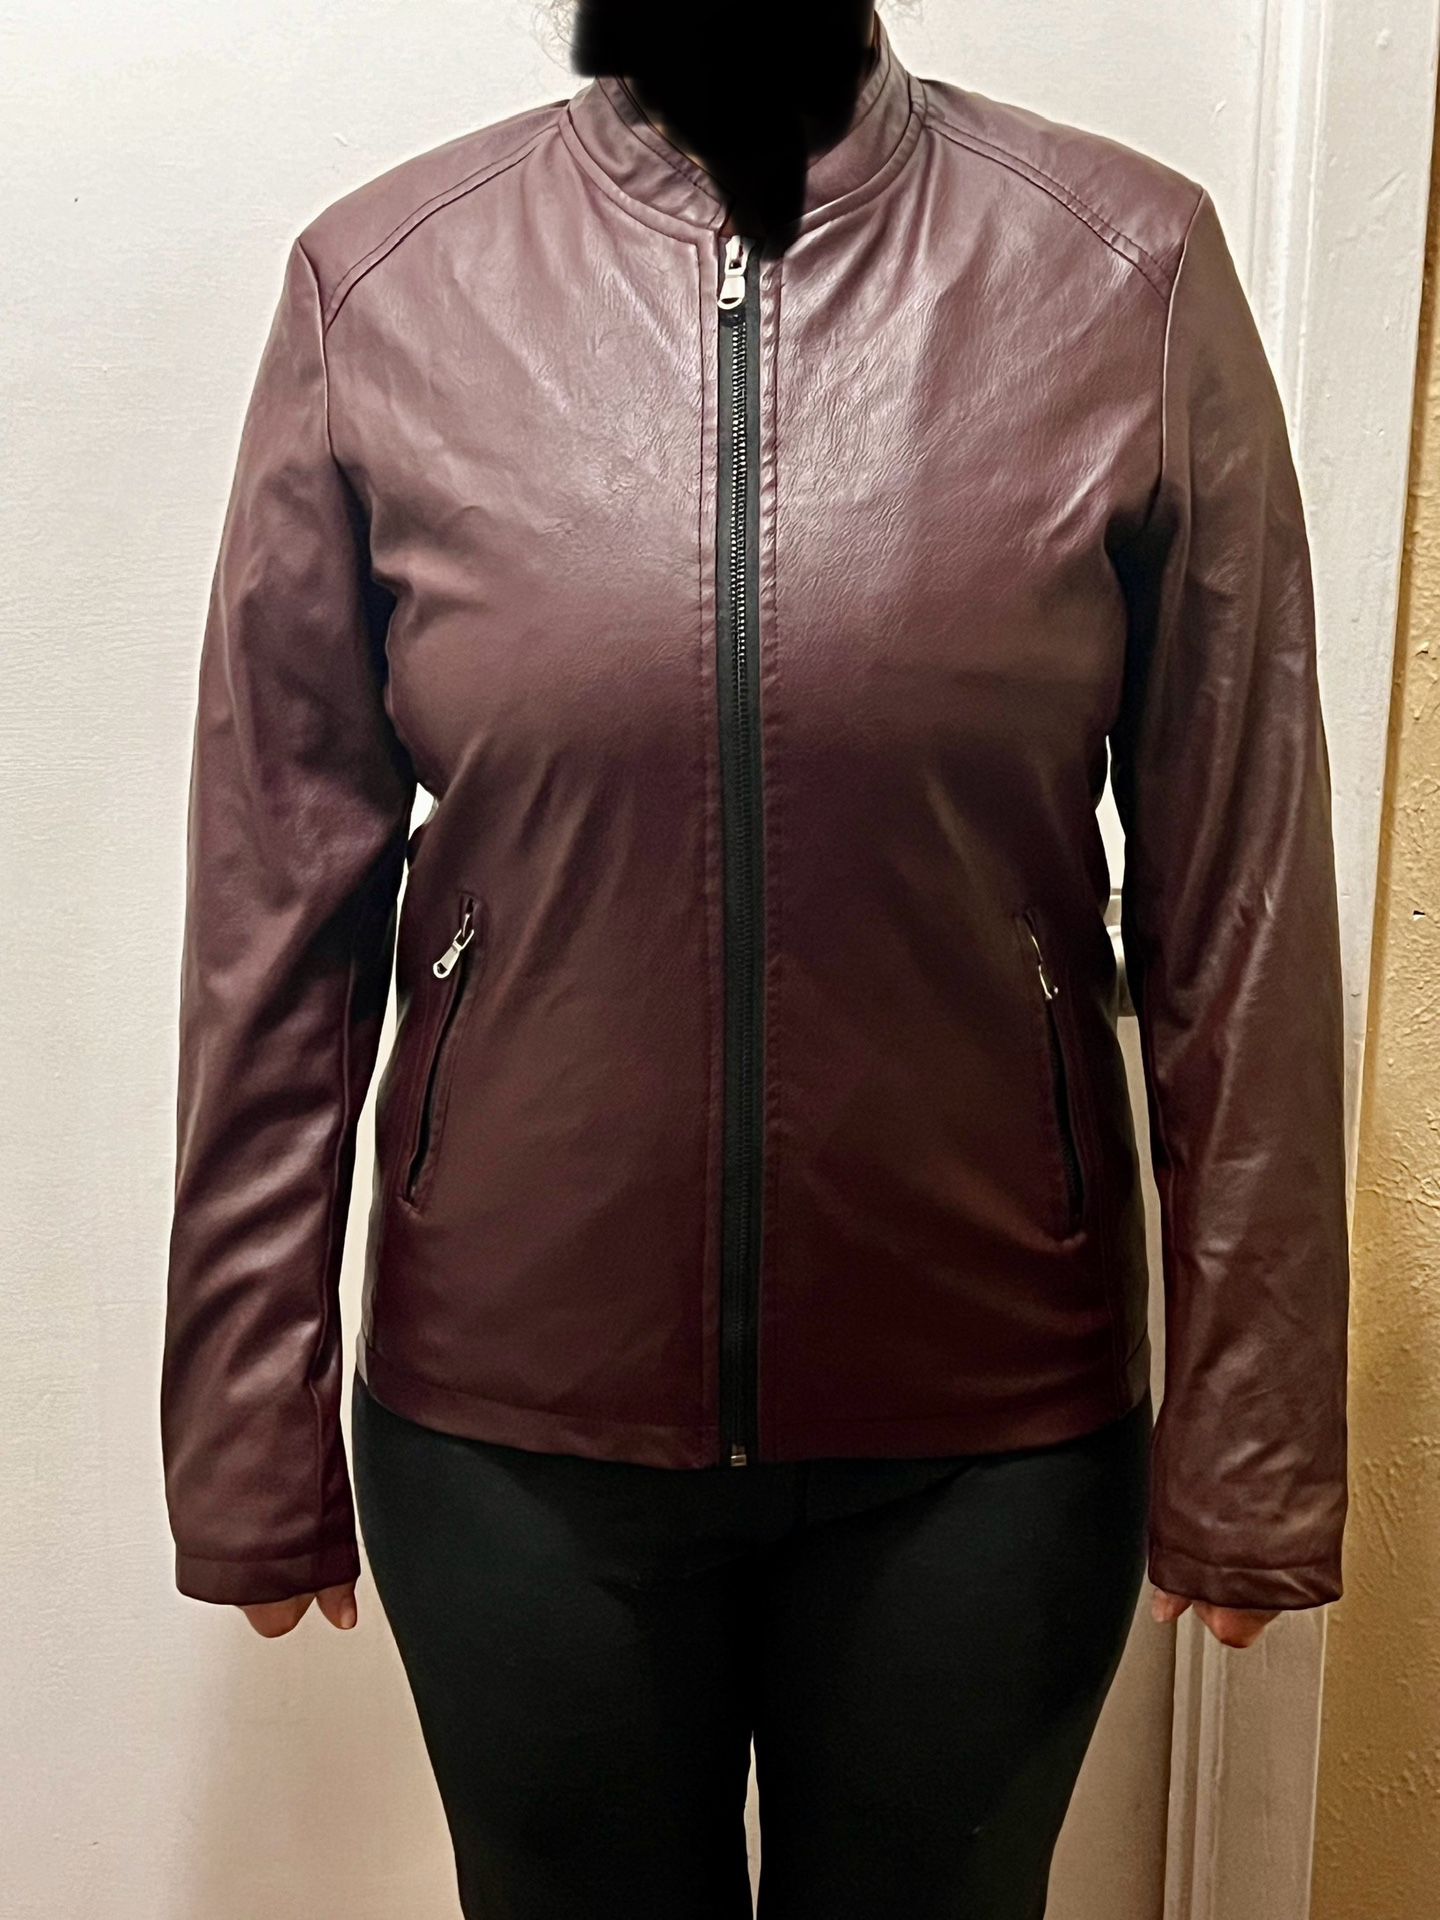 New Leather Jacket Size Xl